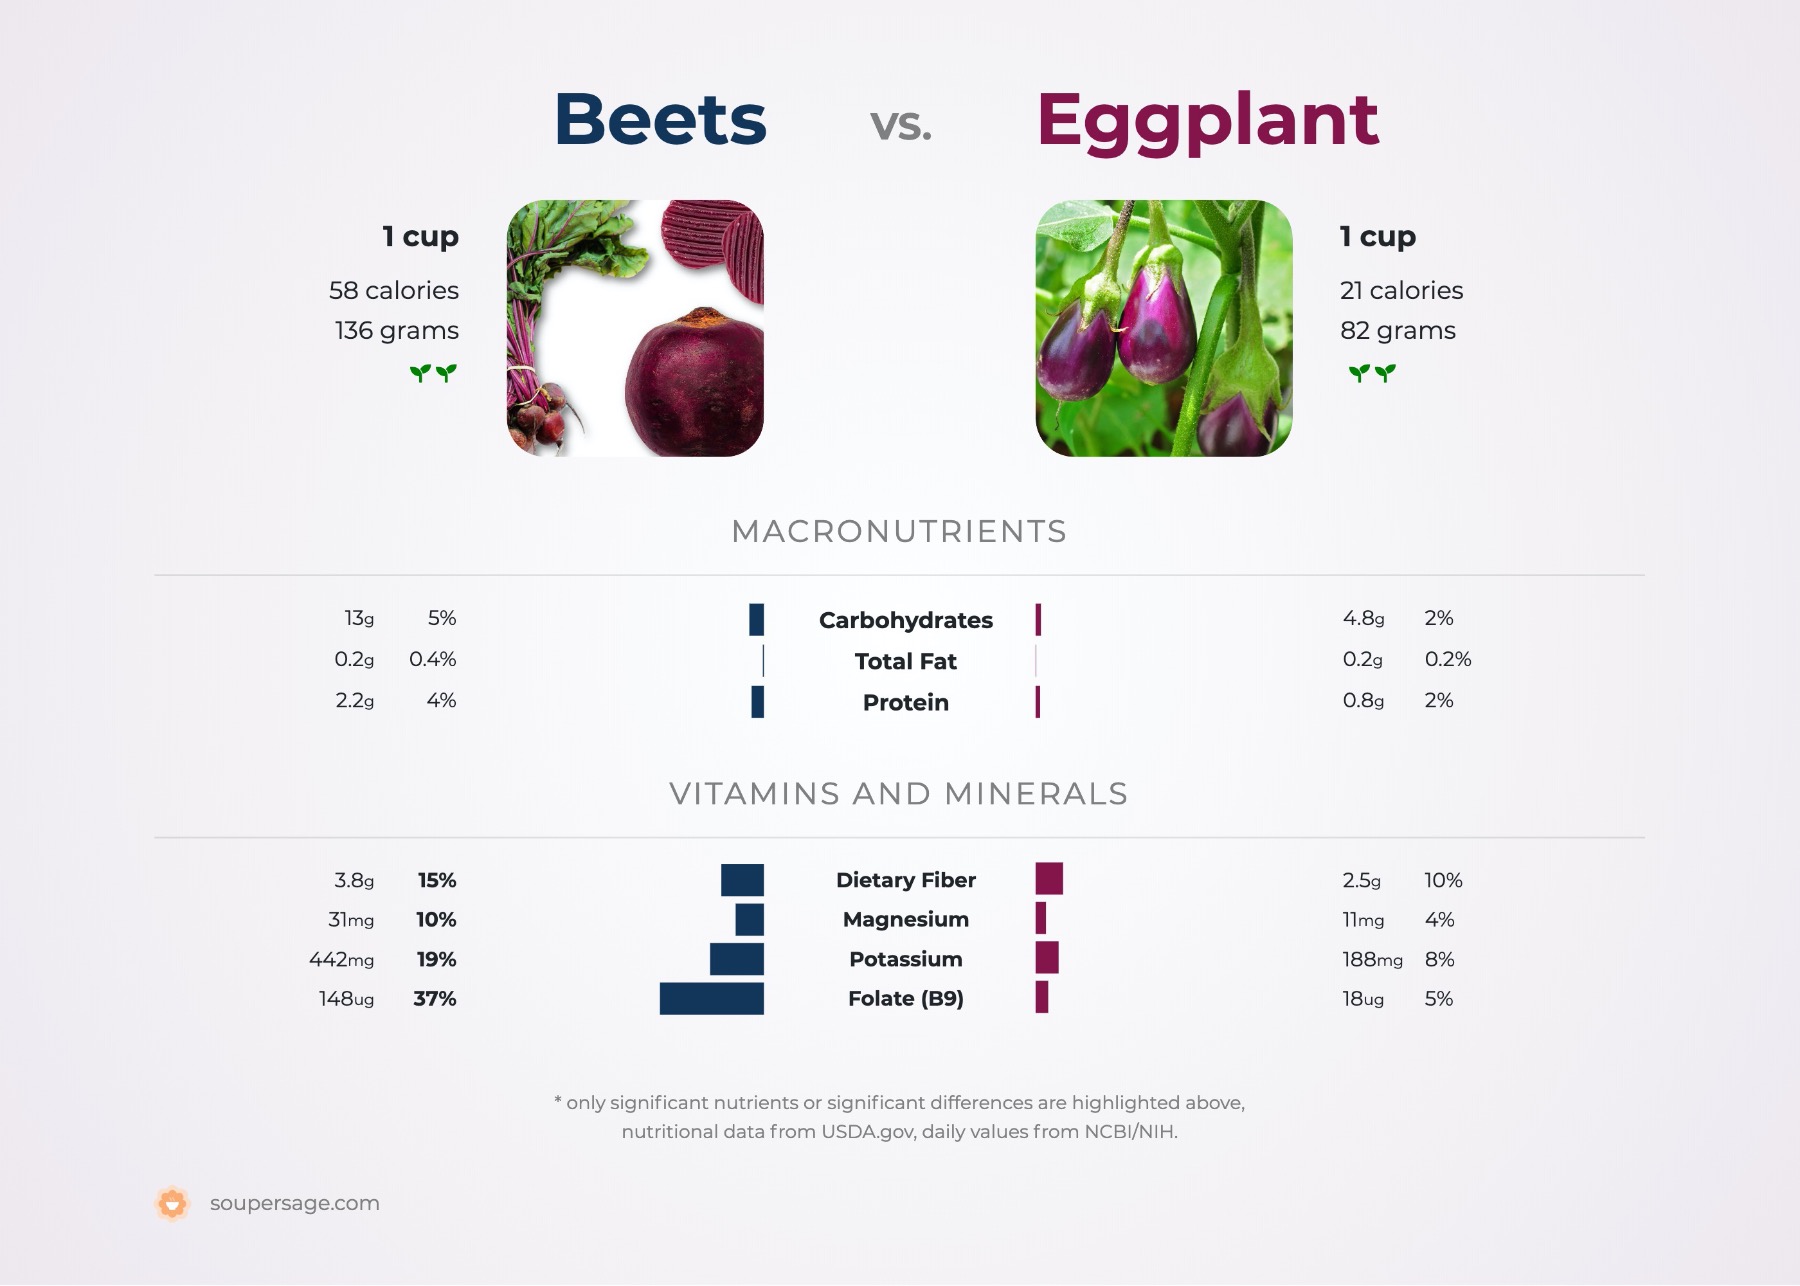 nutrition comparison of beets vs. eggplant